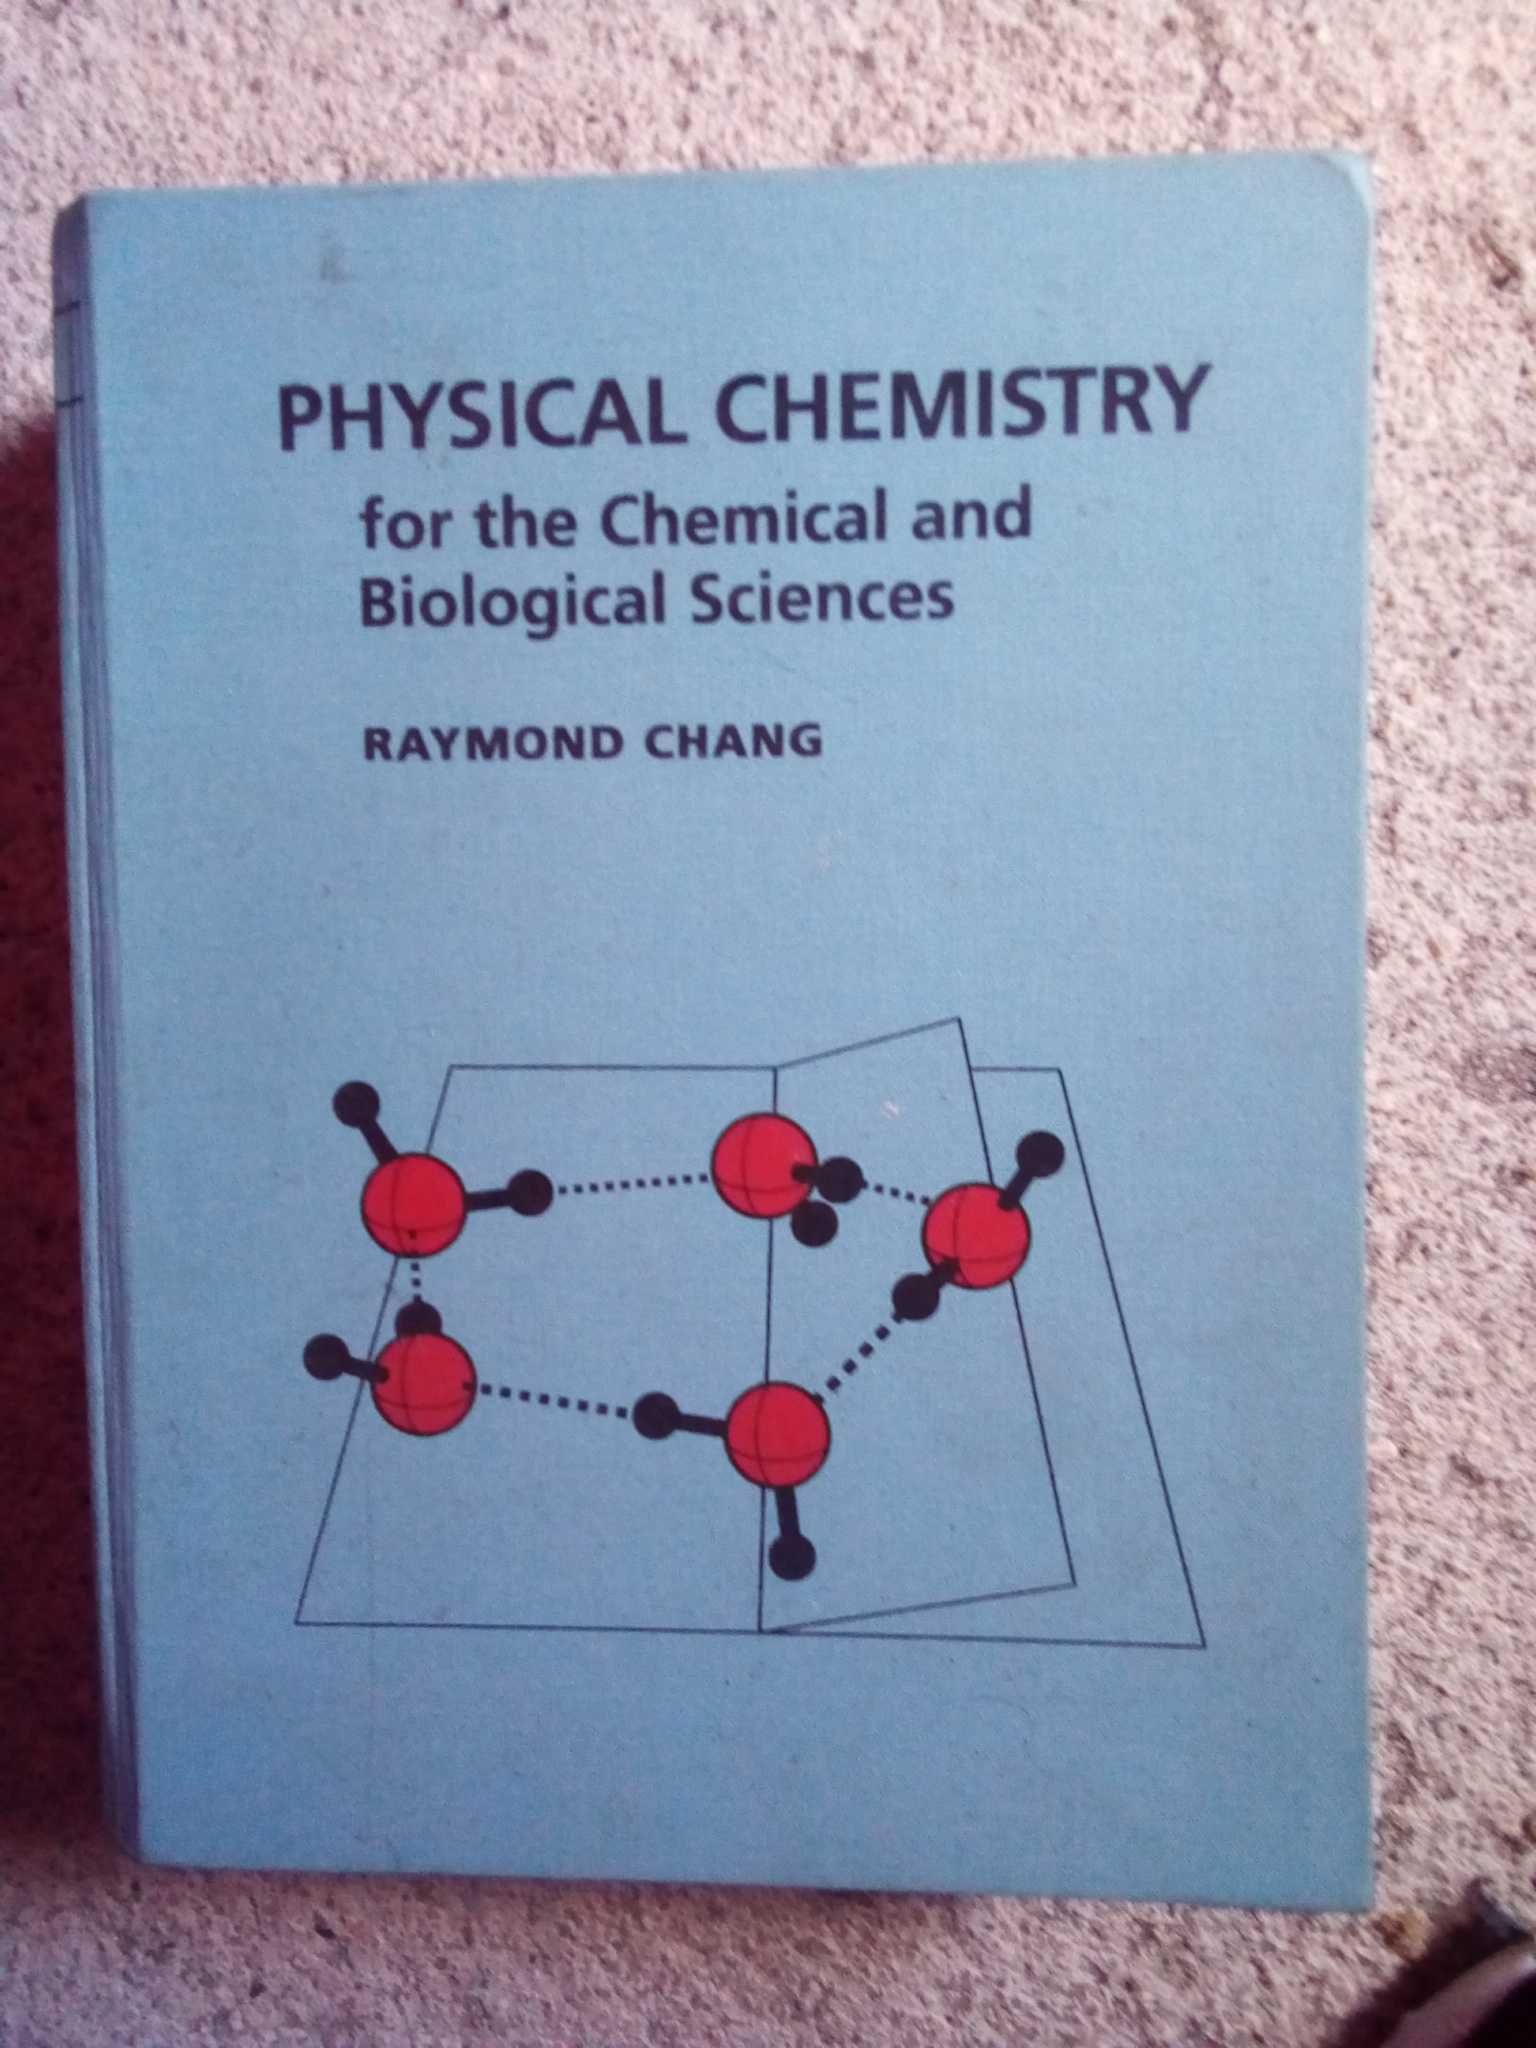 Livro "Physical Chemistry" de Raymond Chang em inglês